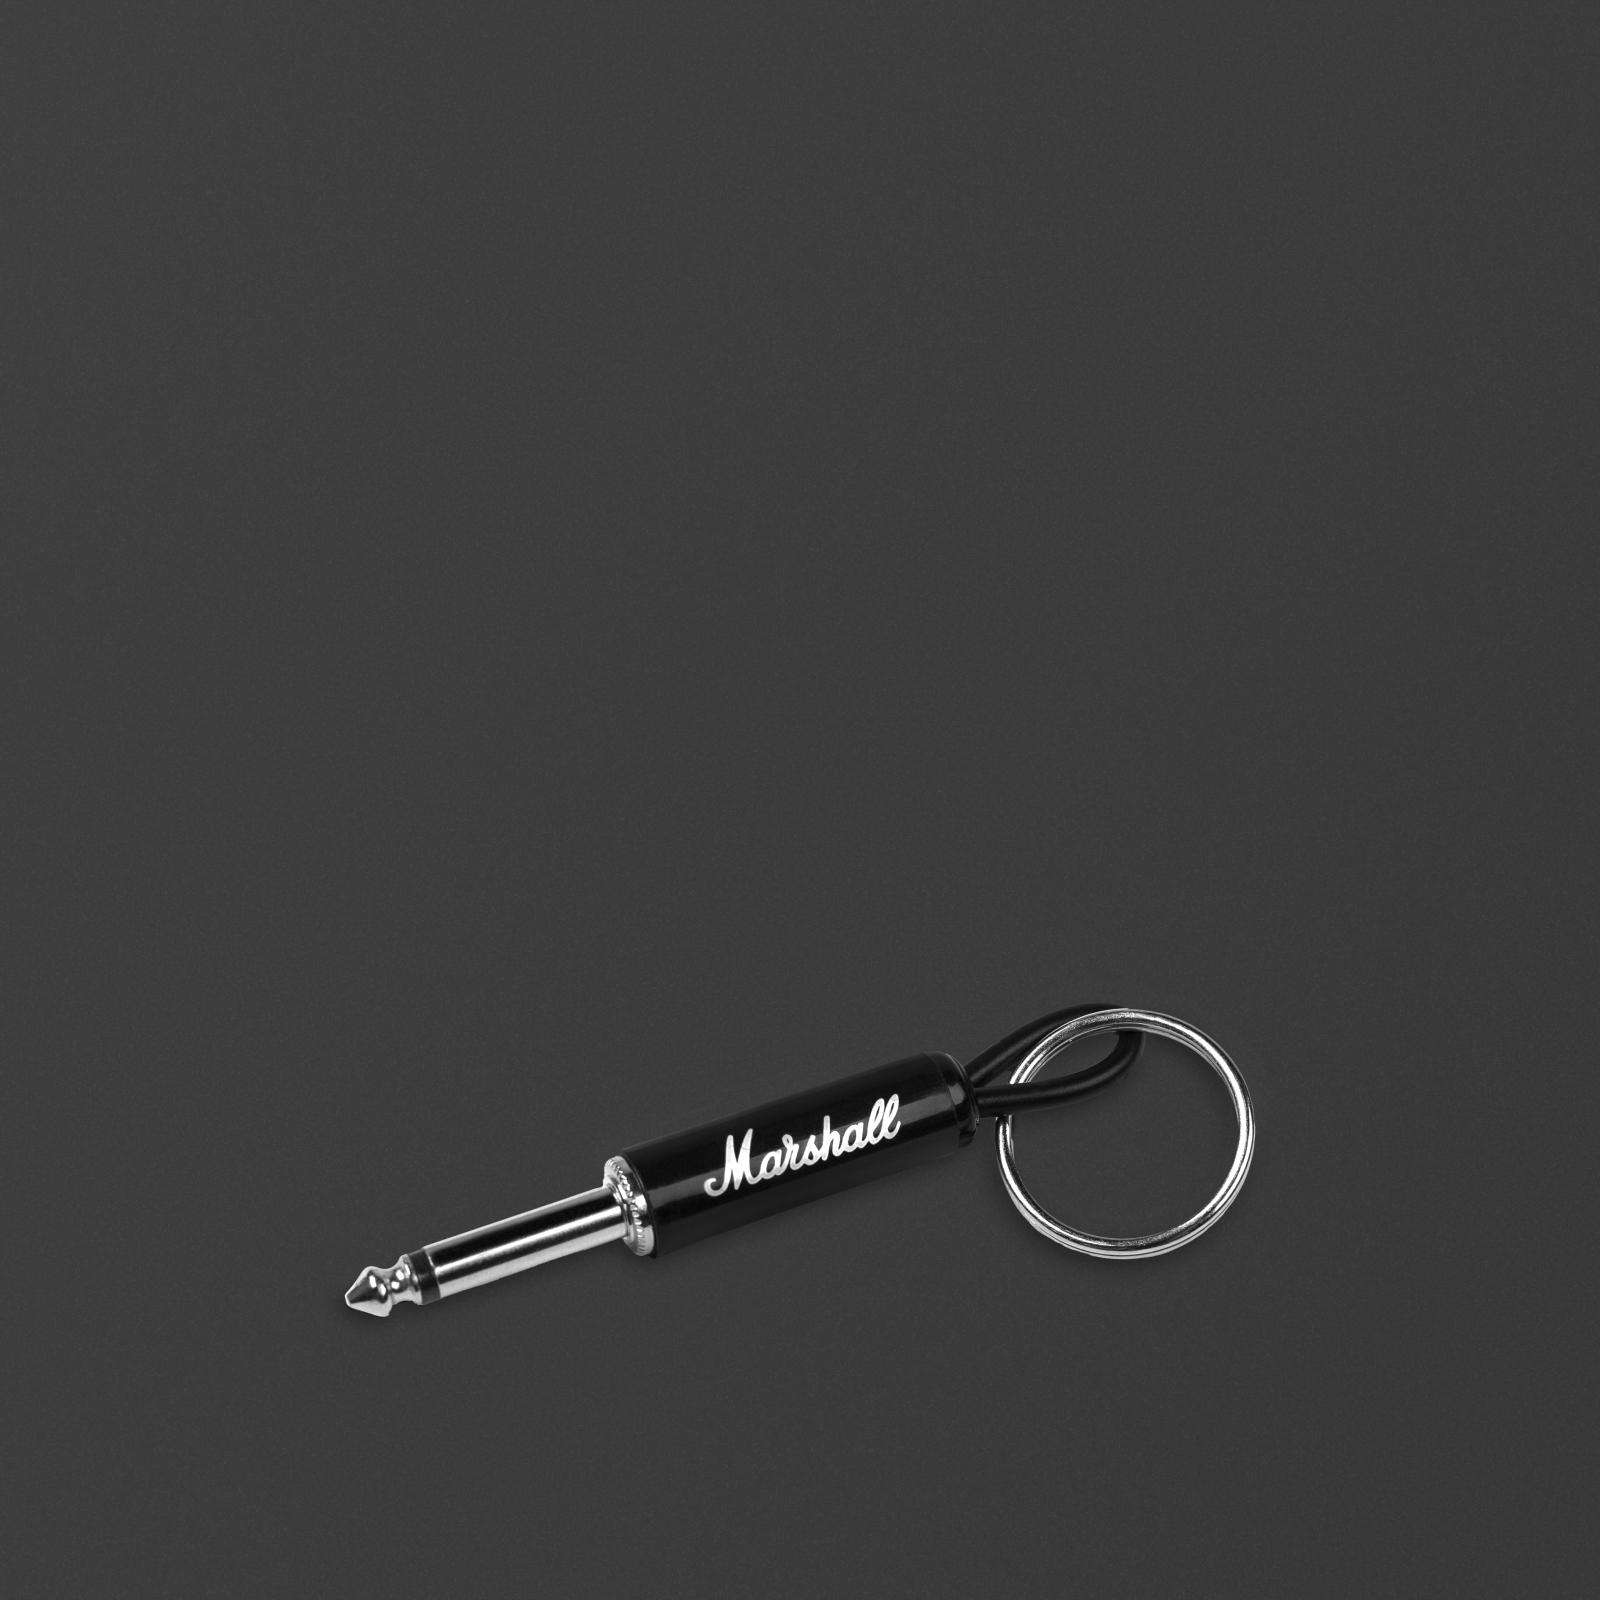 Black guitar jack keychain with Marshall script logo